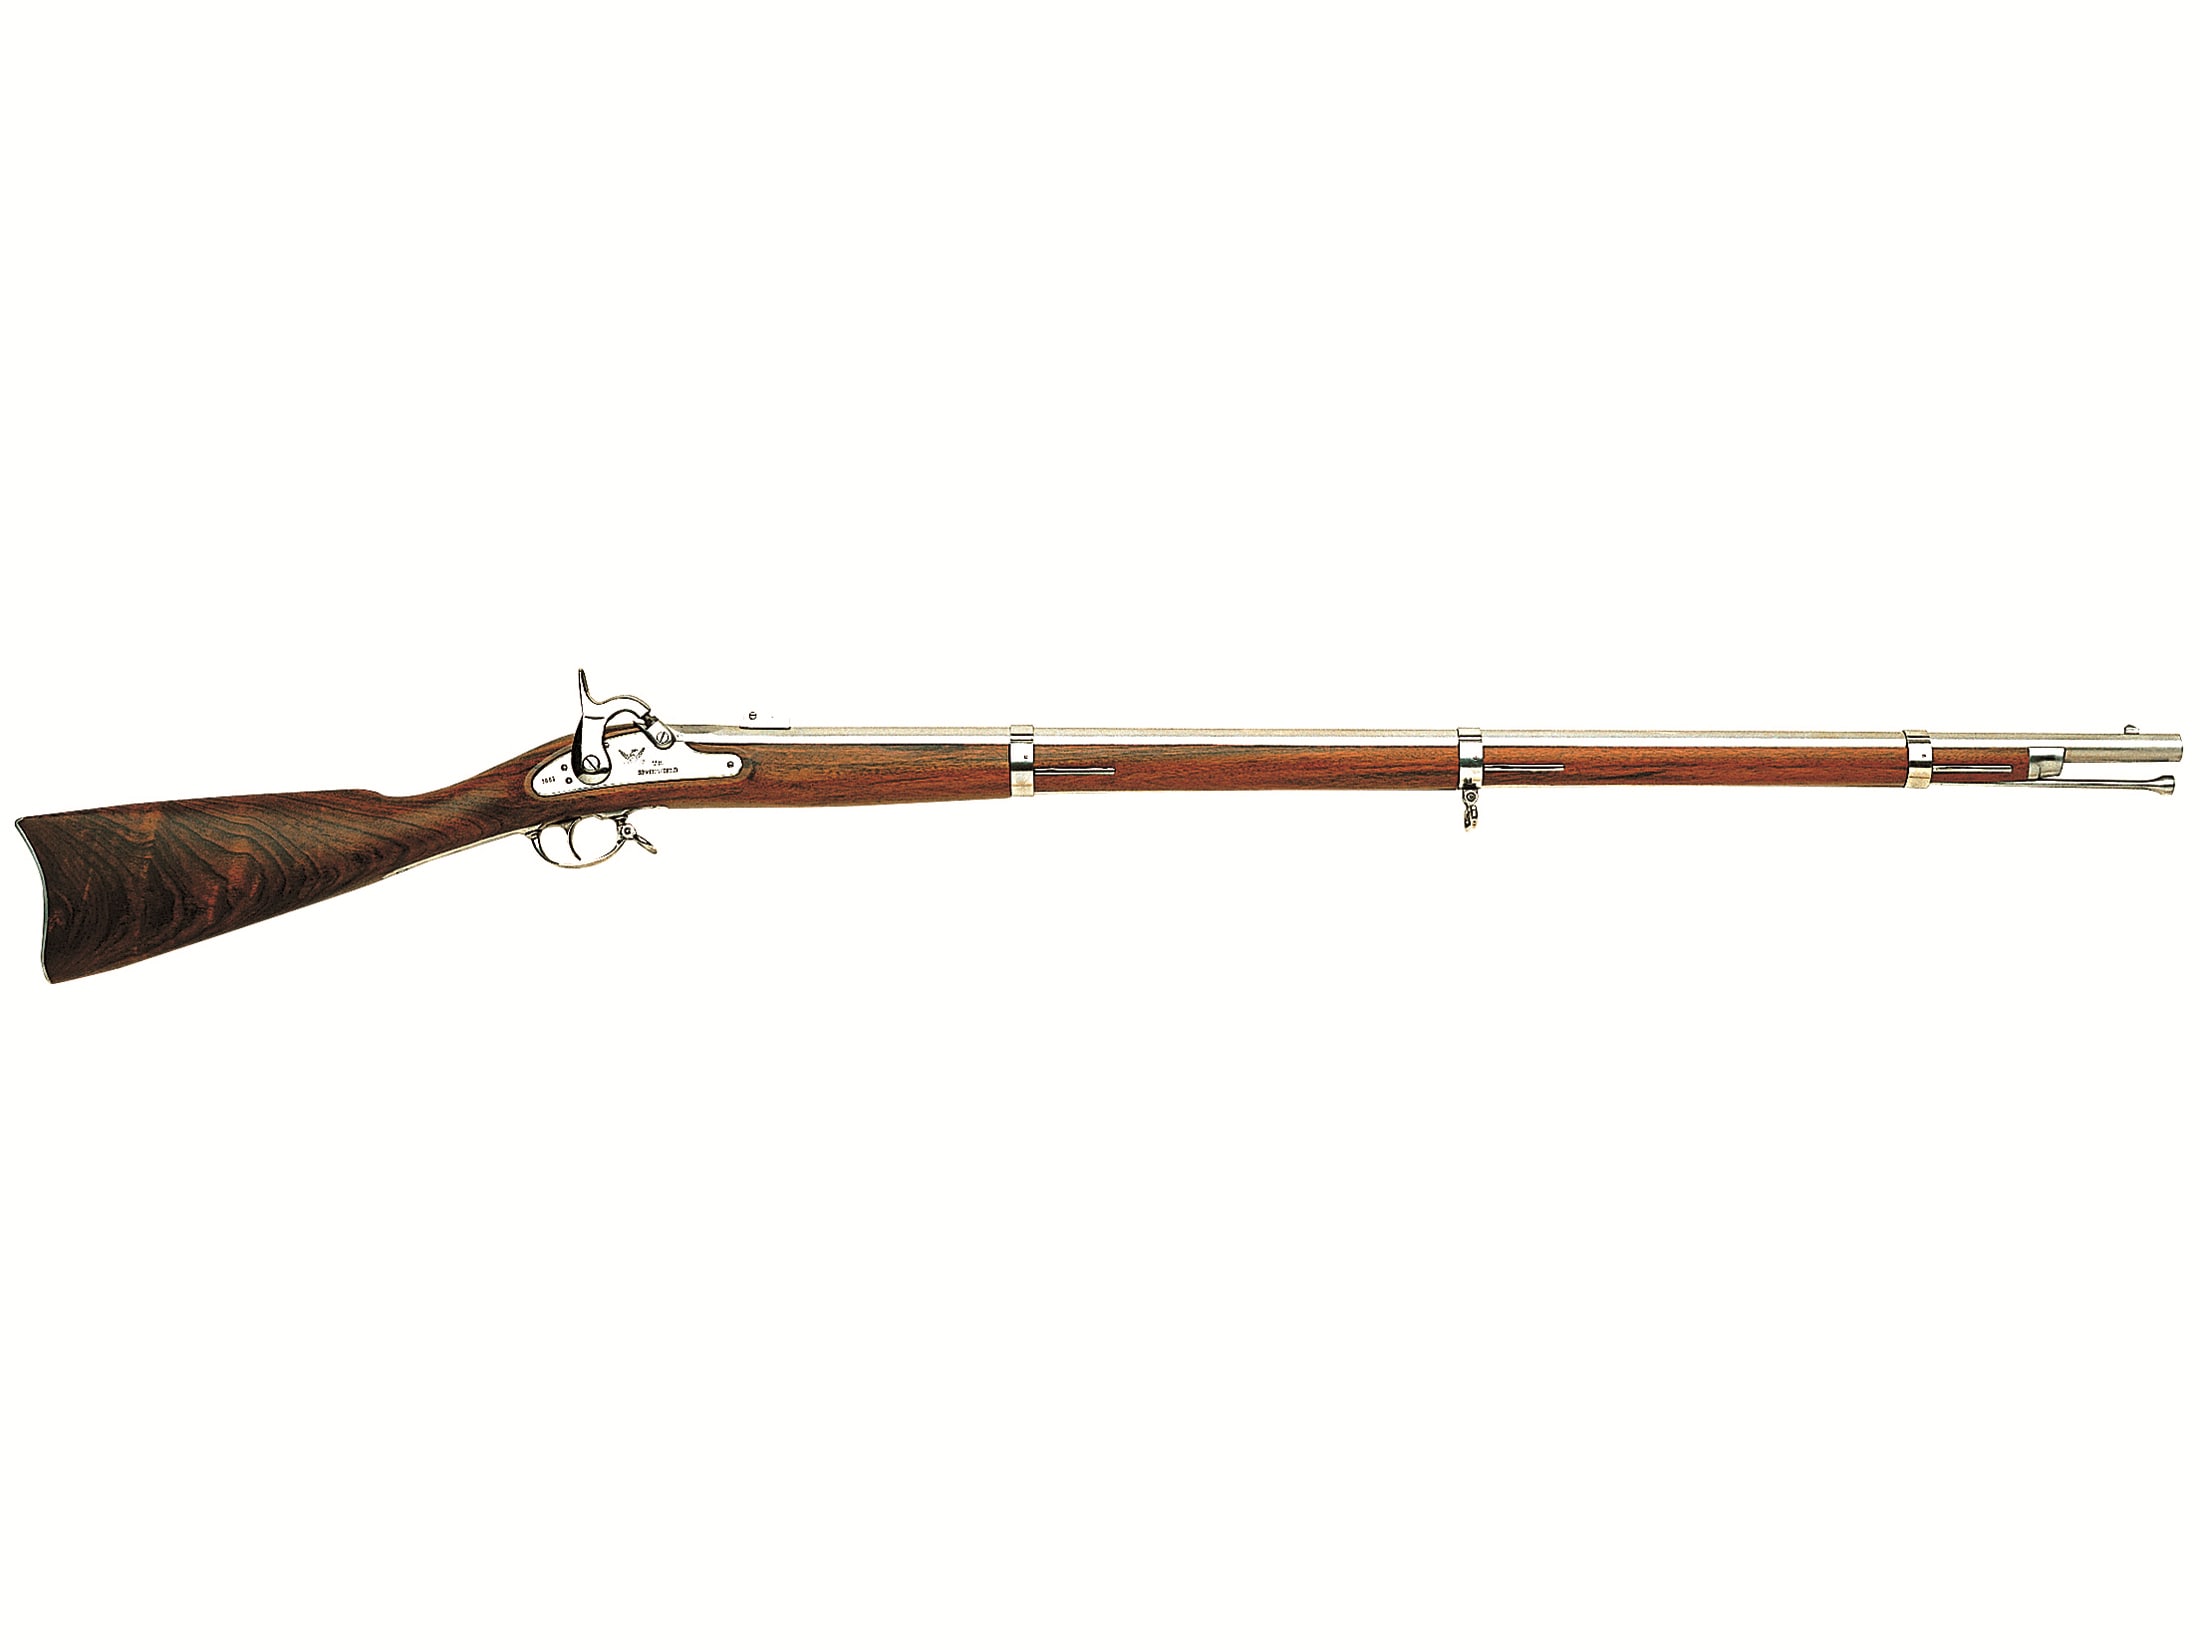 Image of Armi Sport 1861 Springfield Muzzleloading Rifle 58 Caliber Percussion Walnut Stock 40" 1 in 48" Twist Barrel Silver